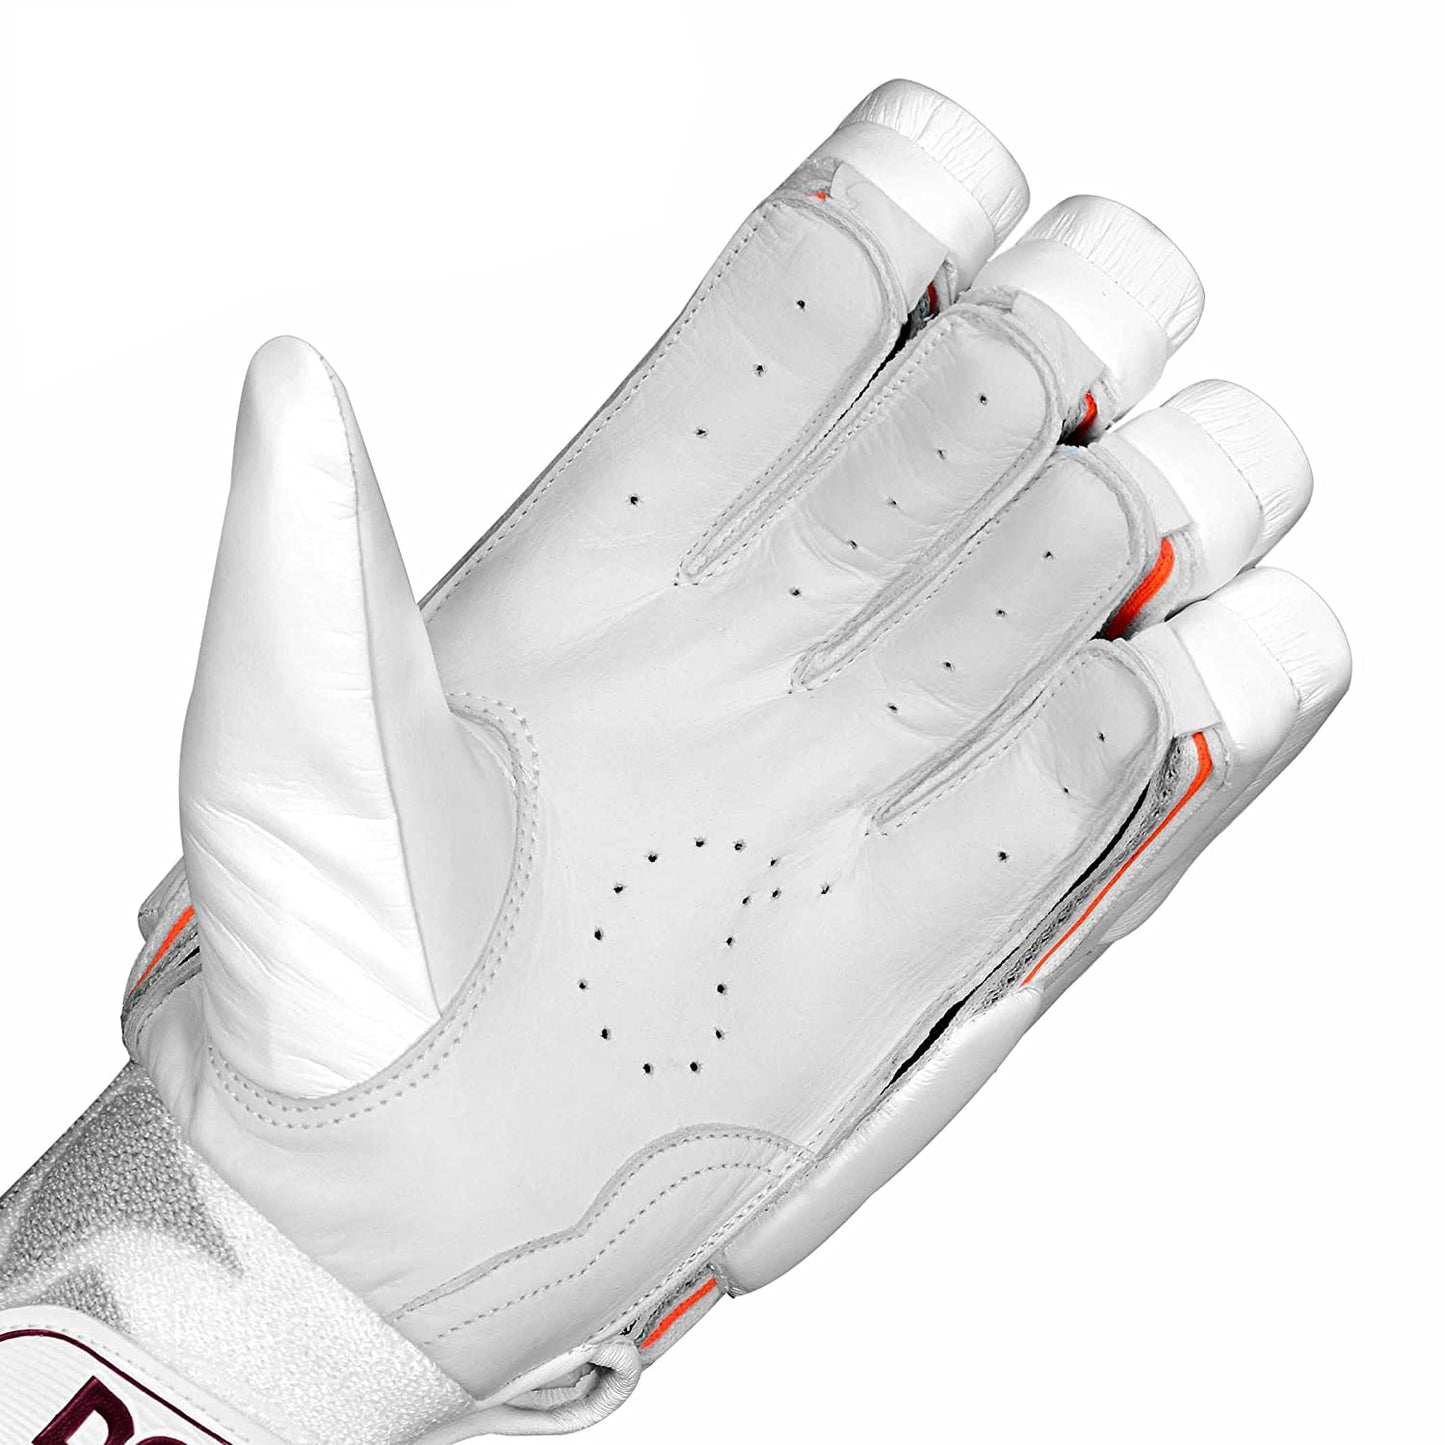 DSC Intense Frost RH Batting Gloves ,White - Best Price online Prokicksports.com